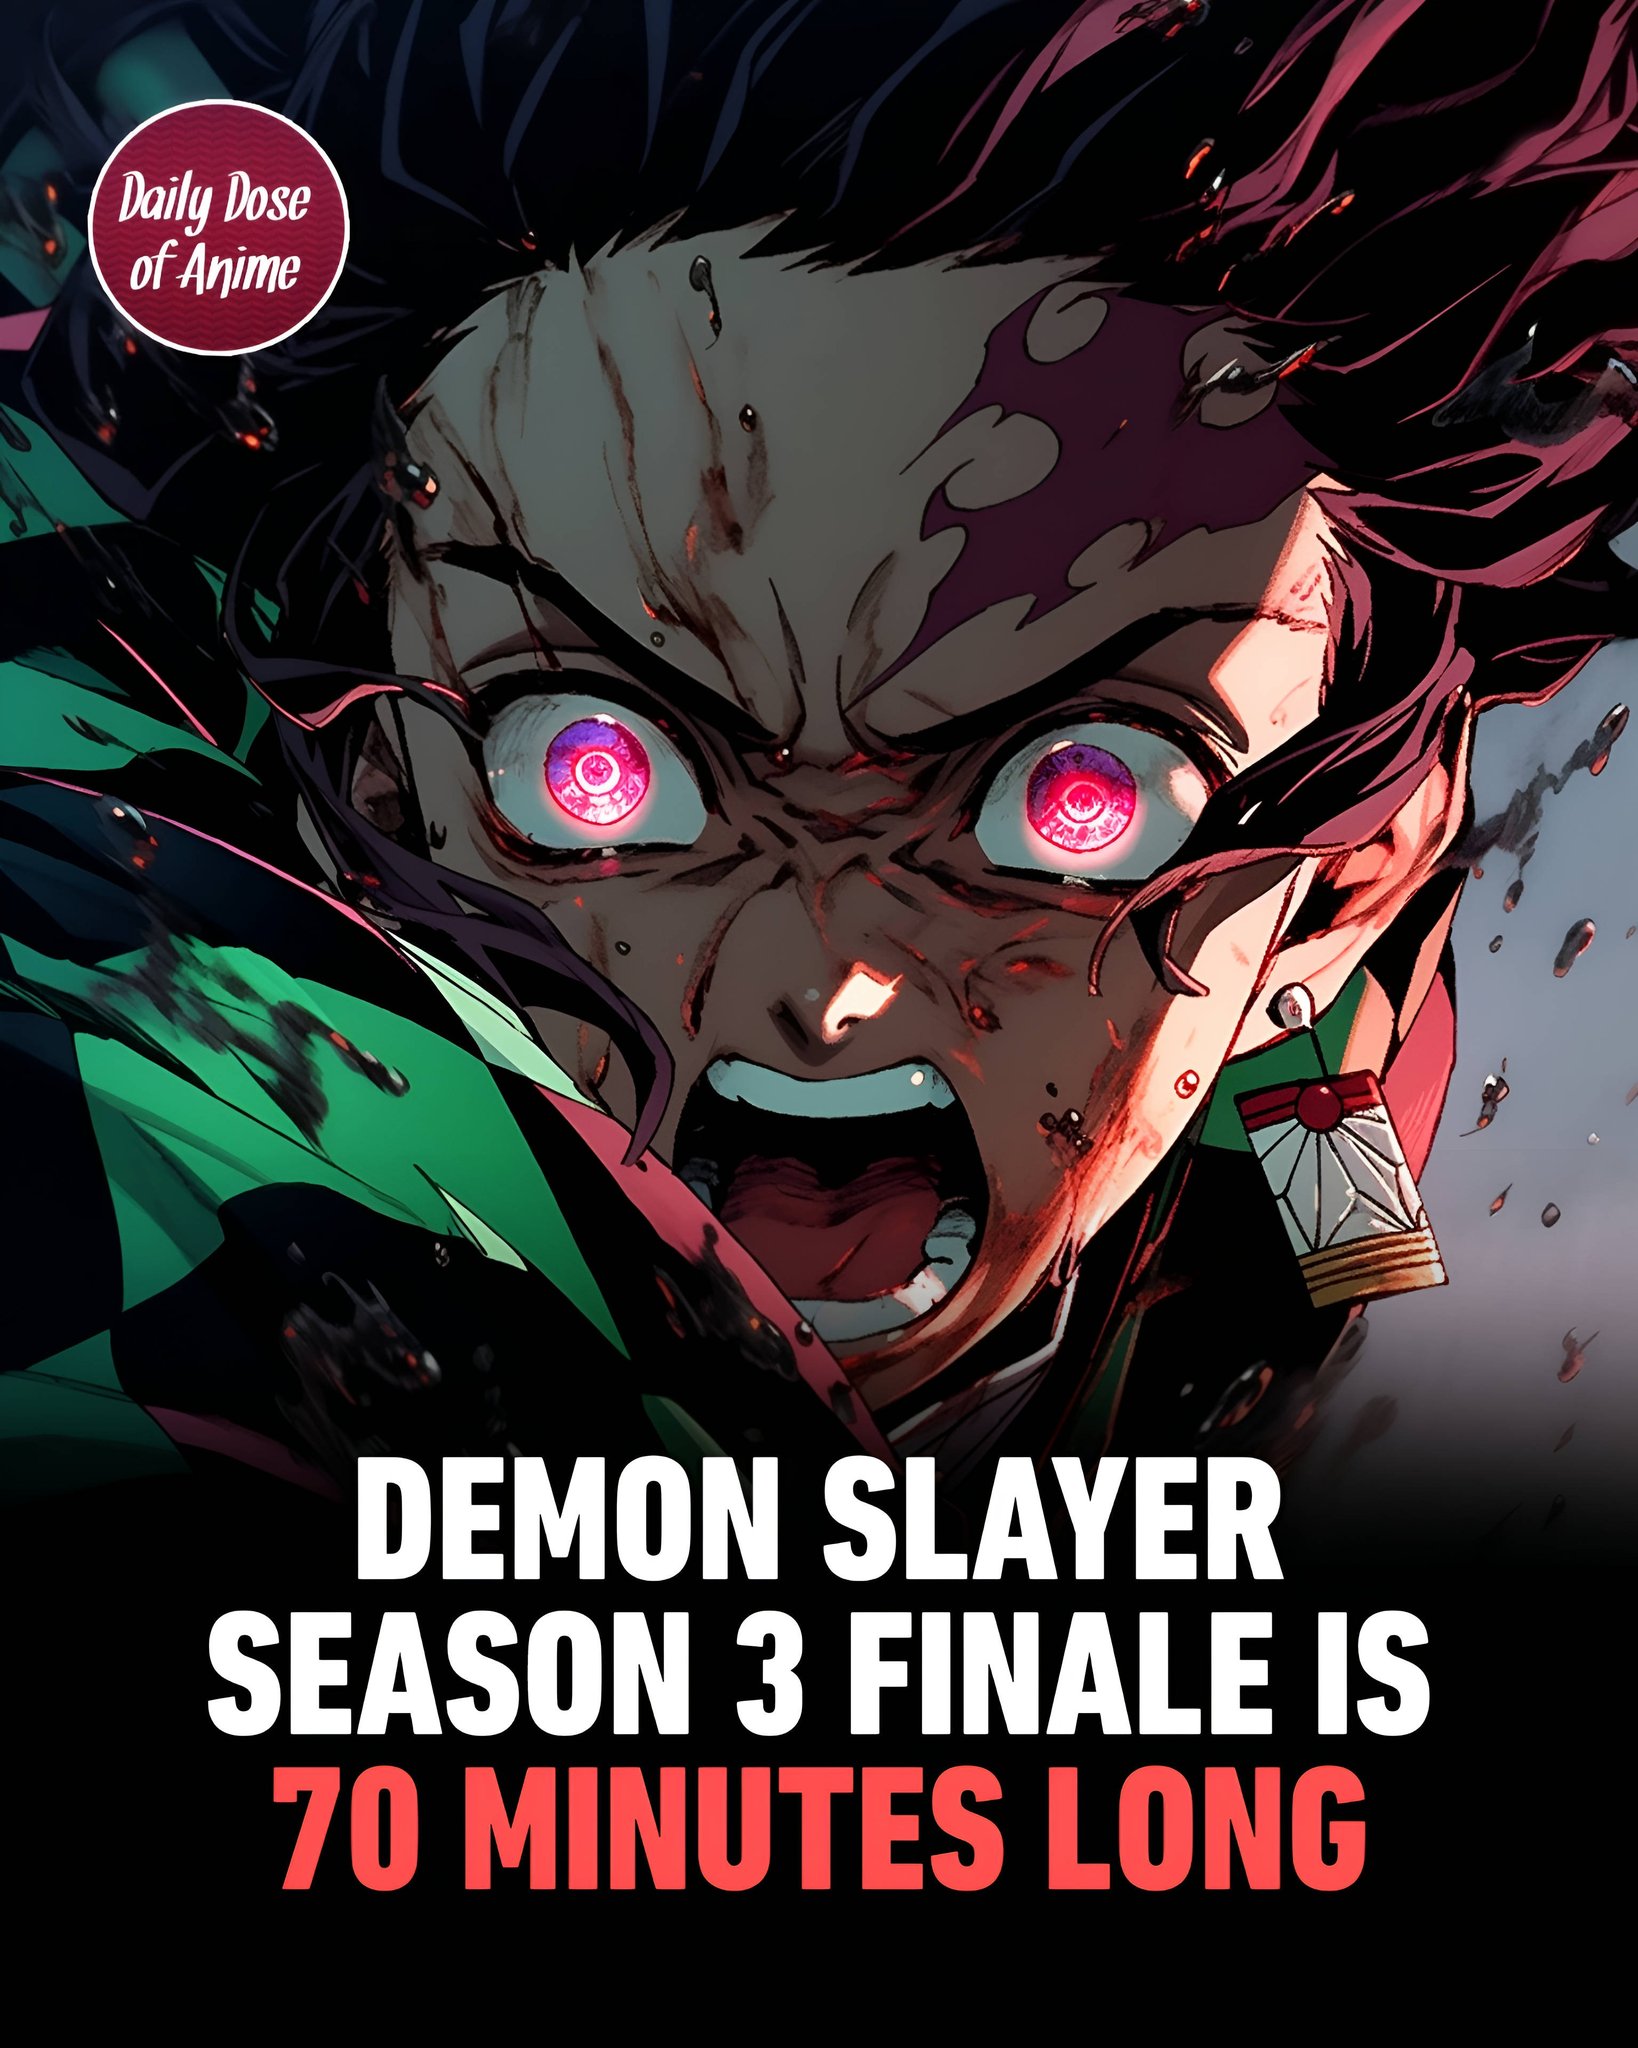 Demon Slayer Season 3 finale will be movie-length